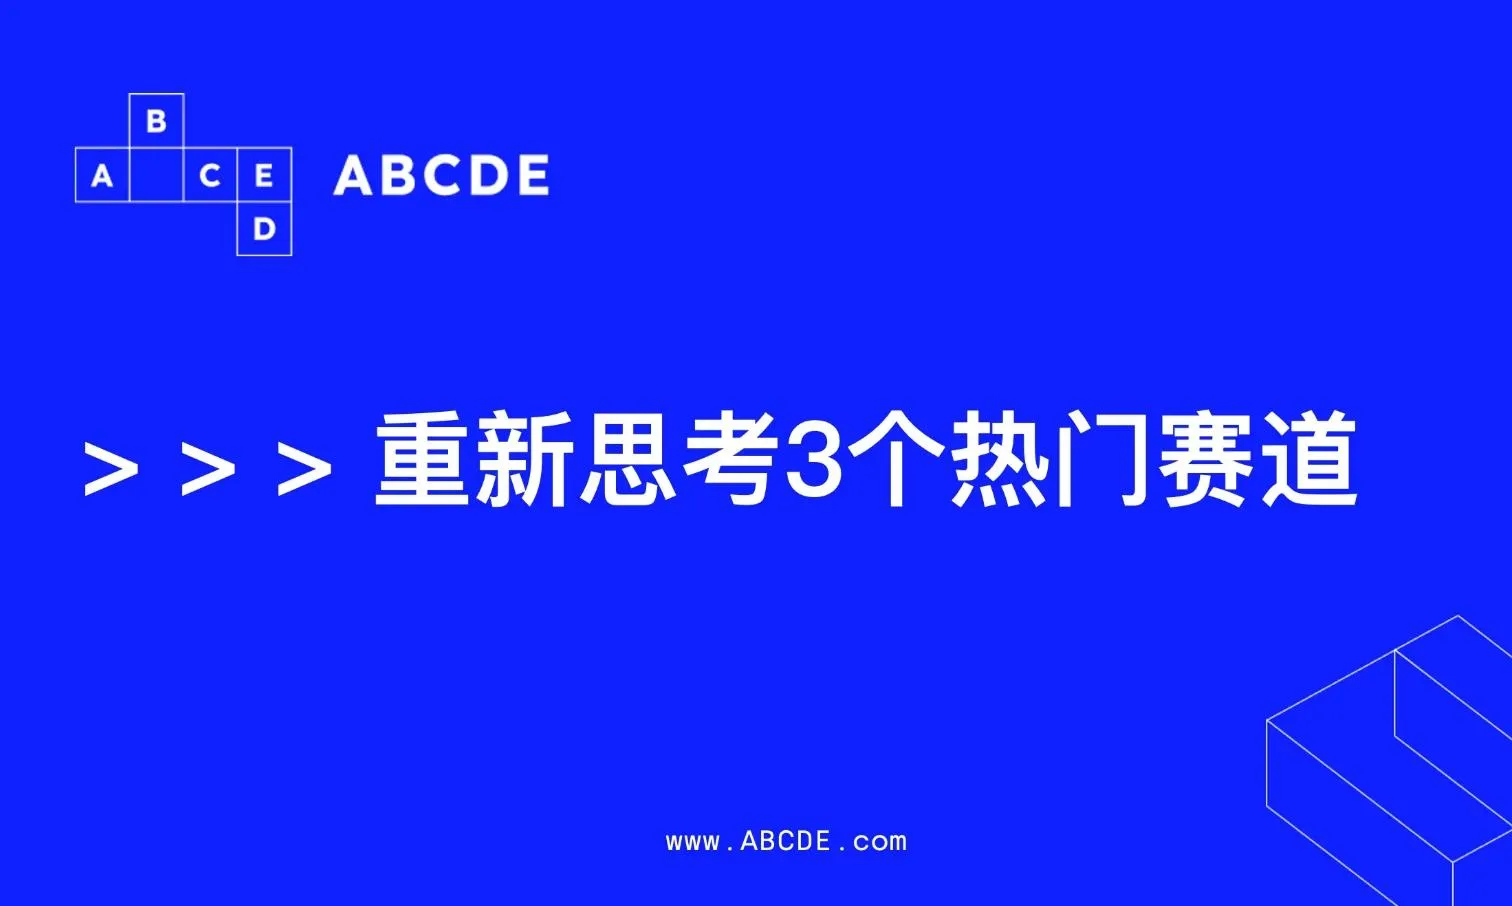 ABCDE Capital：香港大会，重新思考 3 个热门赛道